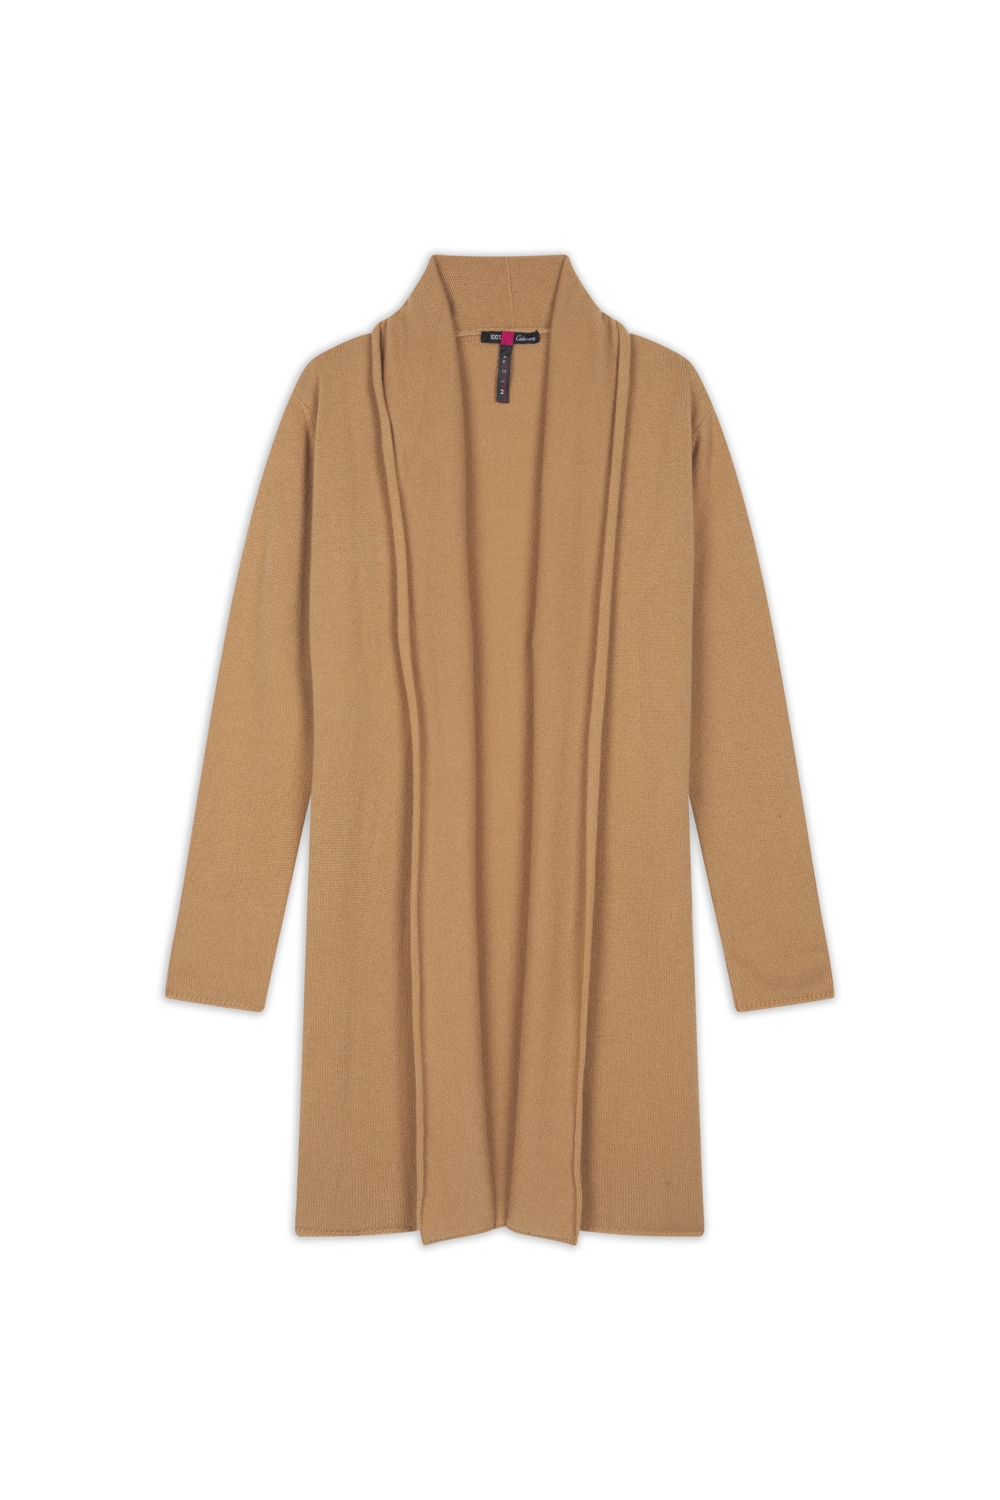 Cachemire robe manteau femme perla camel 4xl